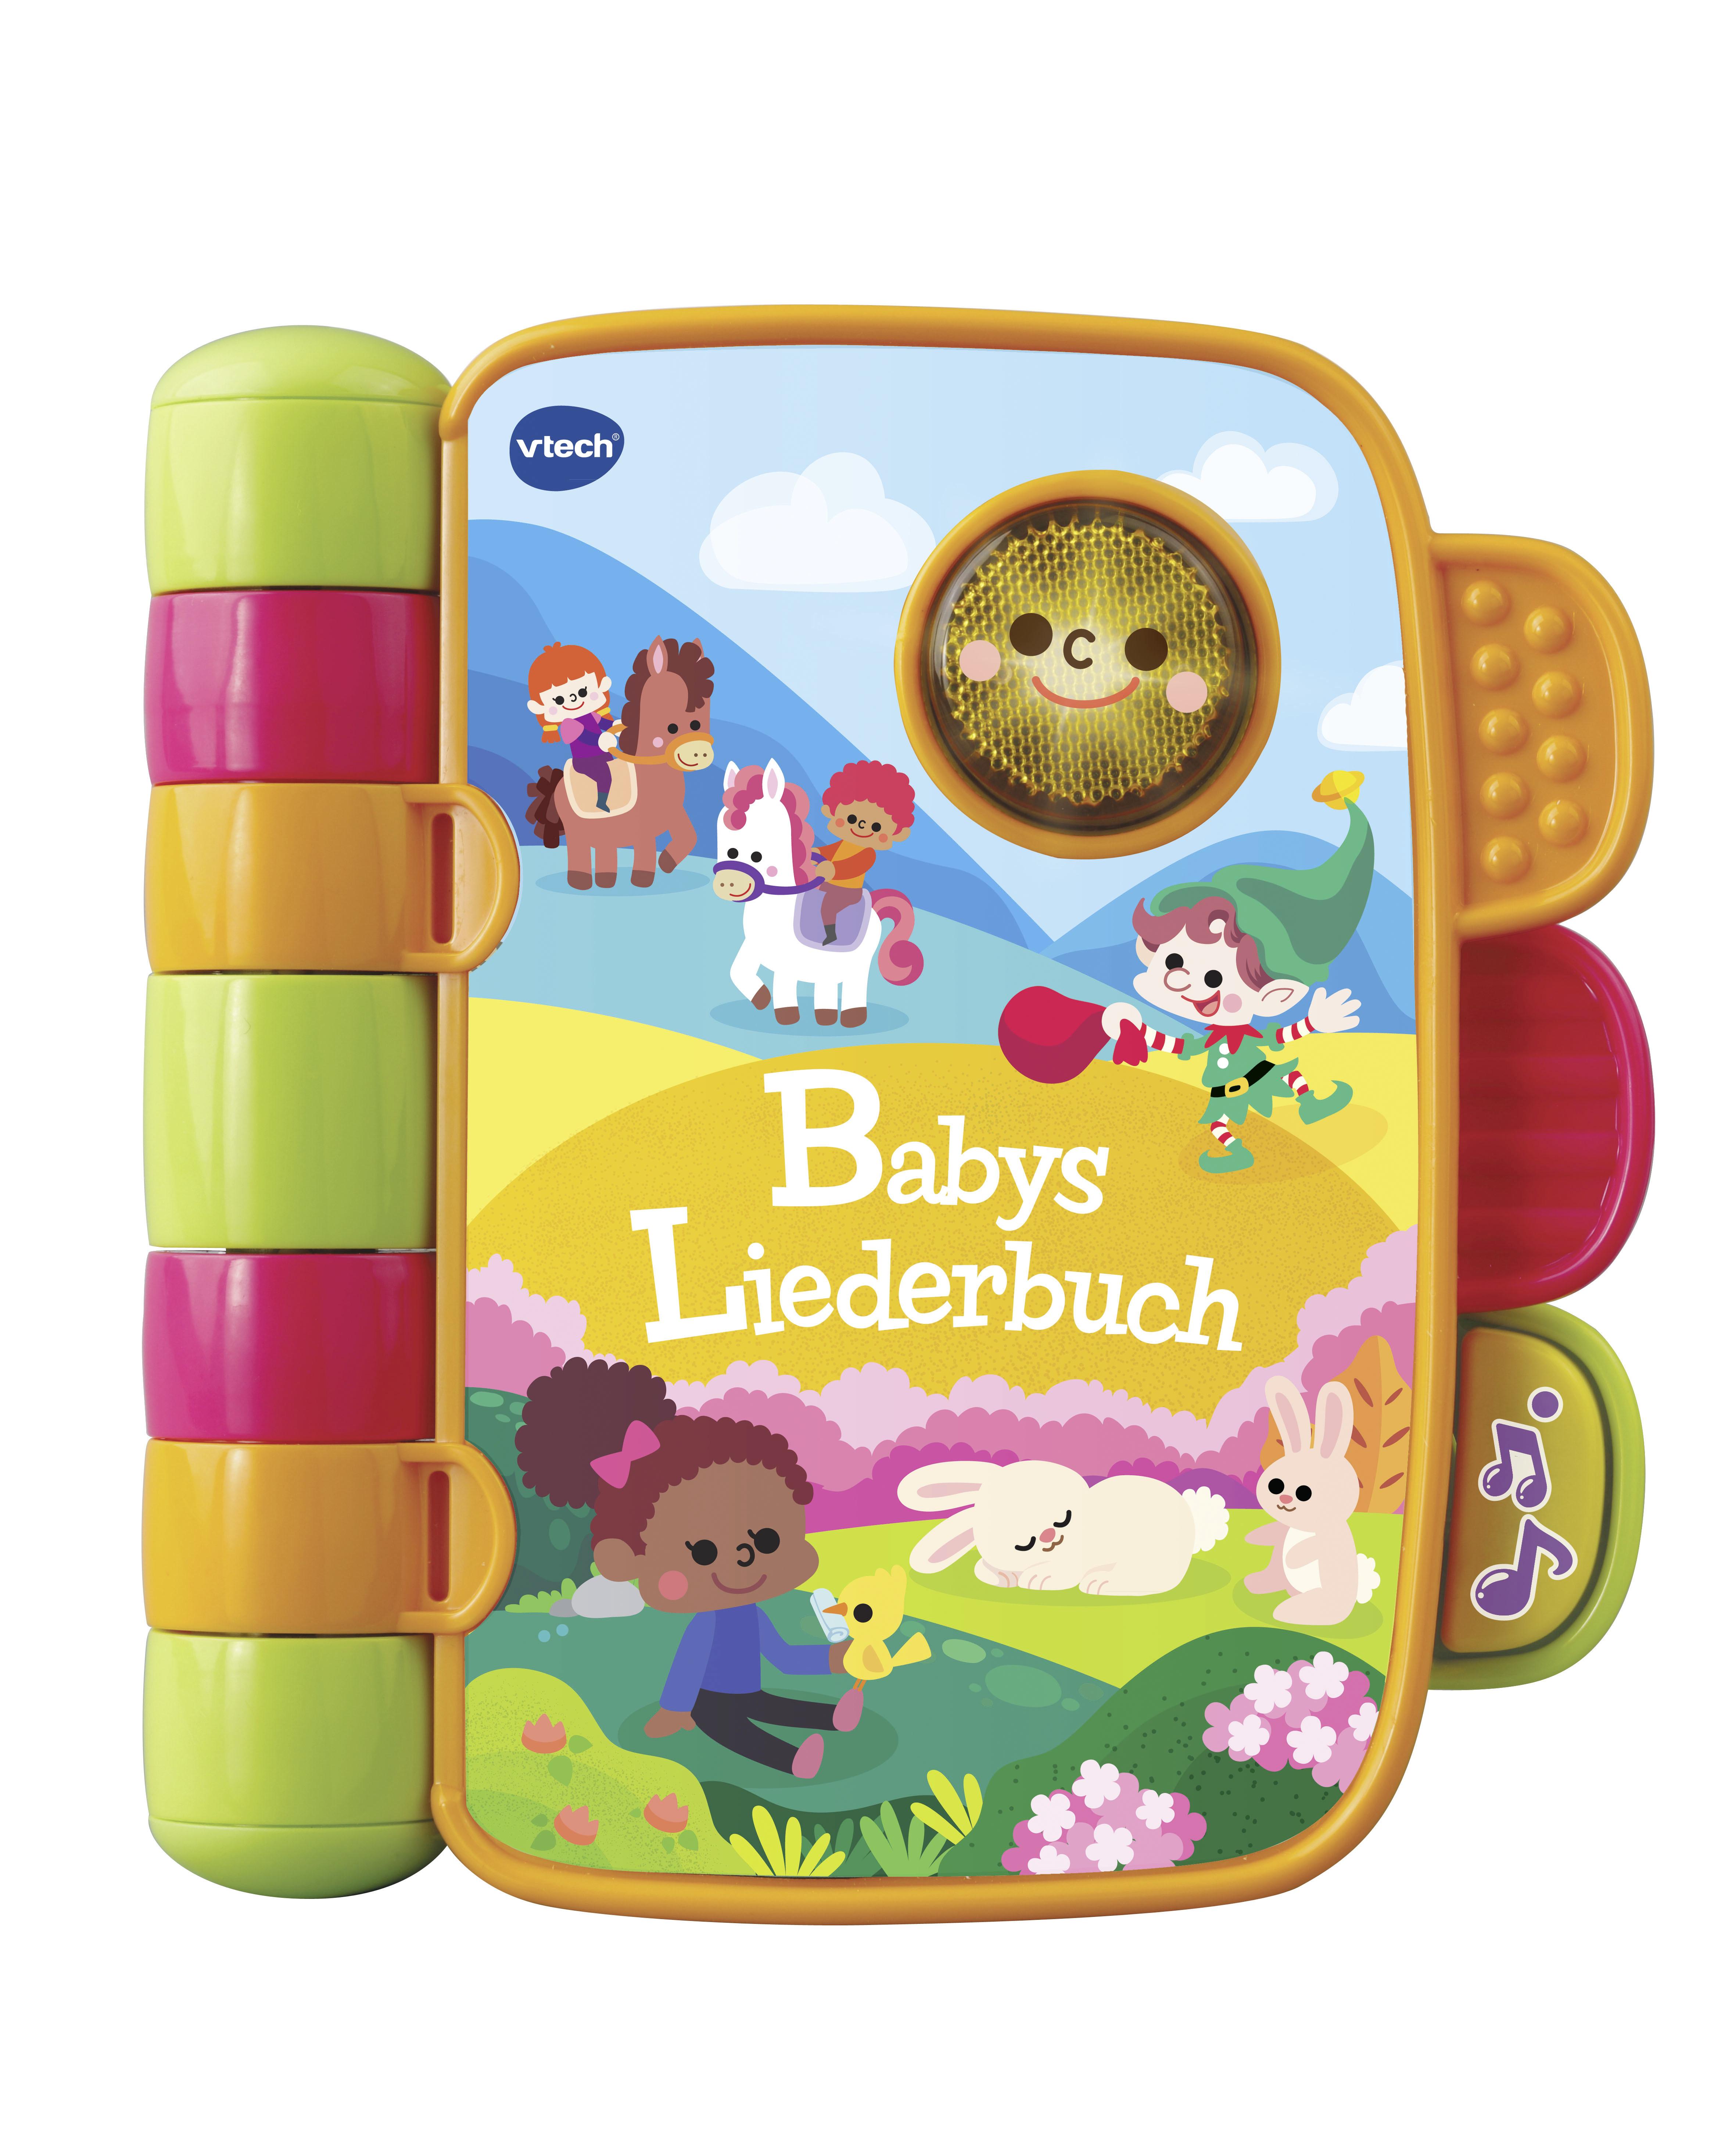 Babys Liederbuch Ab 6 Monaten mit Batterien - Multicolor, Basics, Kunststoff (20,3/21,6/5,2cm) - Vtech